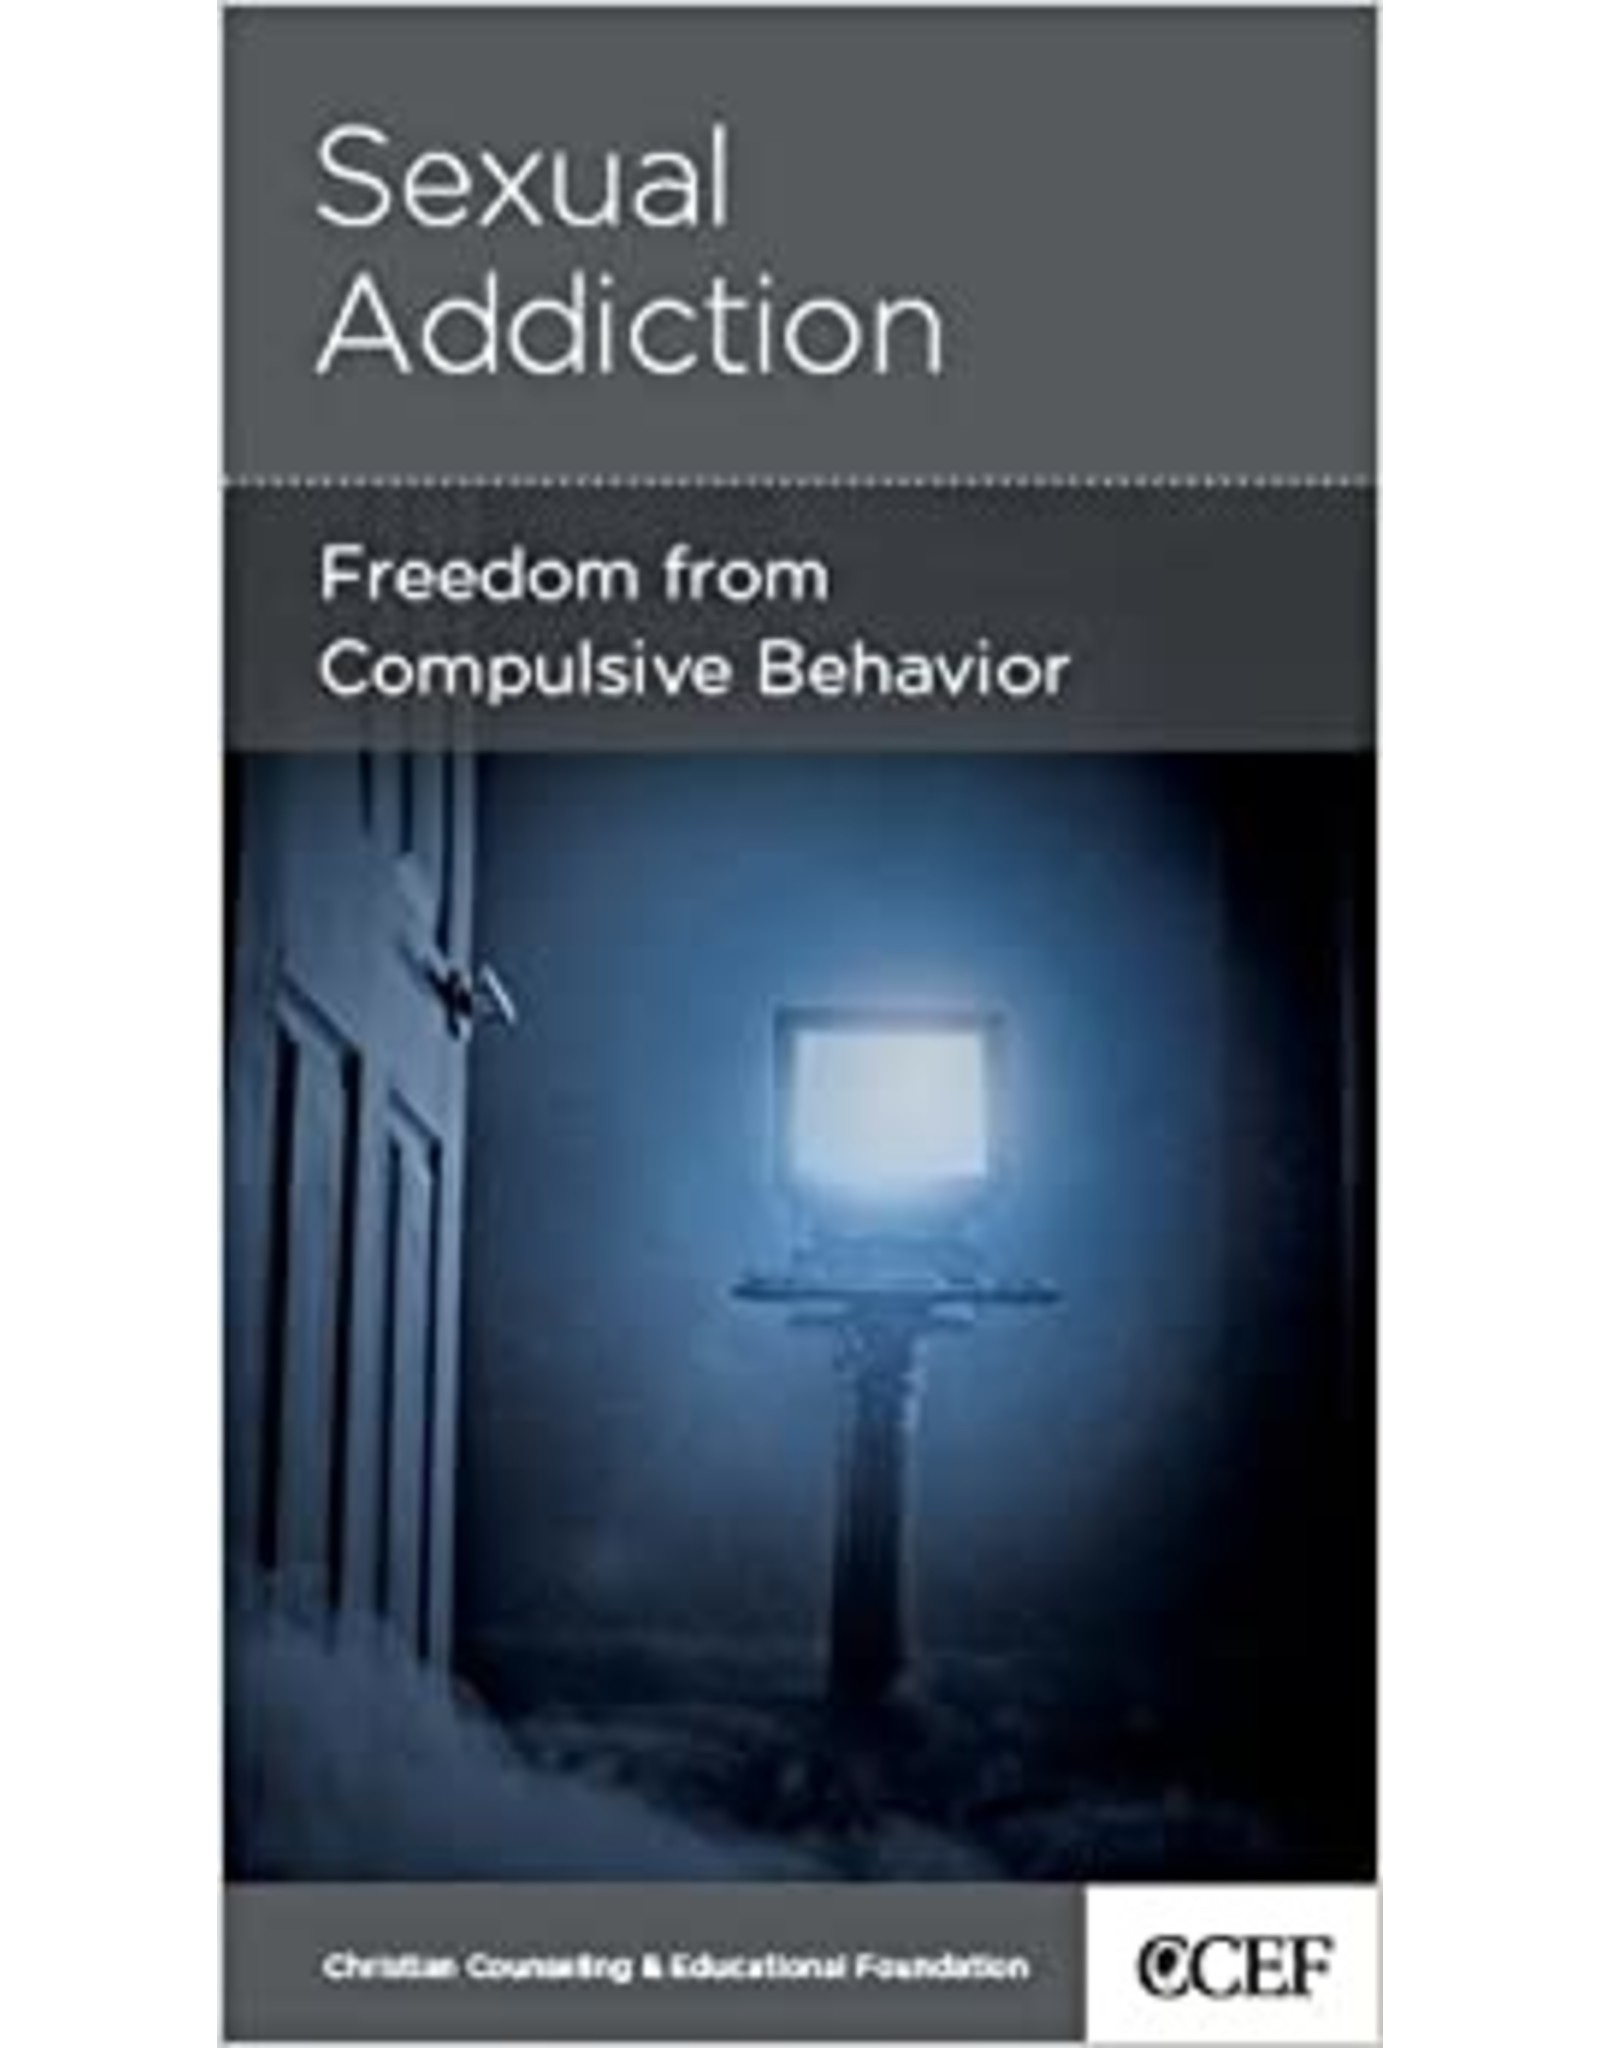 David Powlison Sexual Addiction: Freedom from Compulsive Behaviour